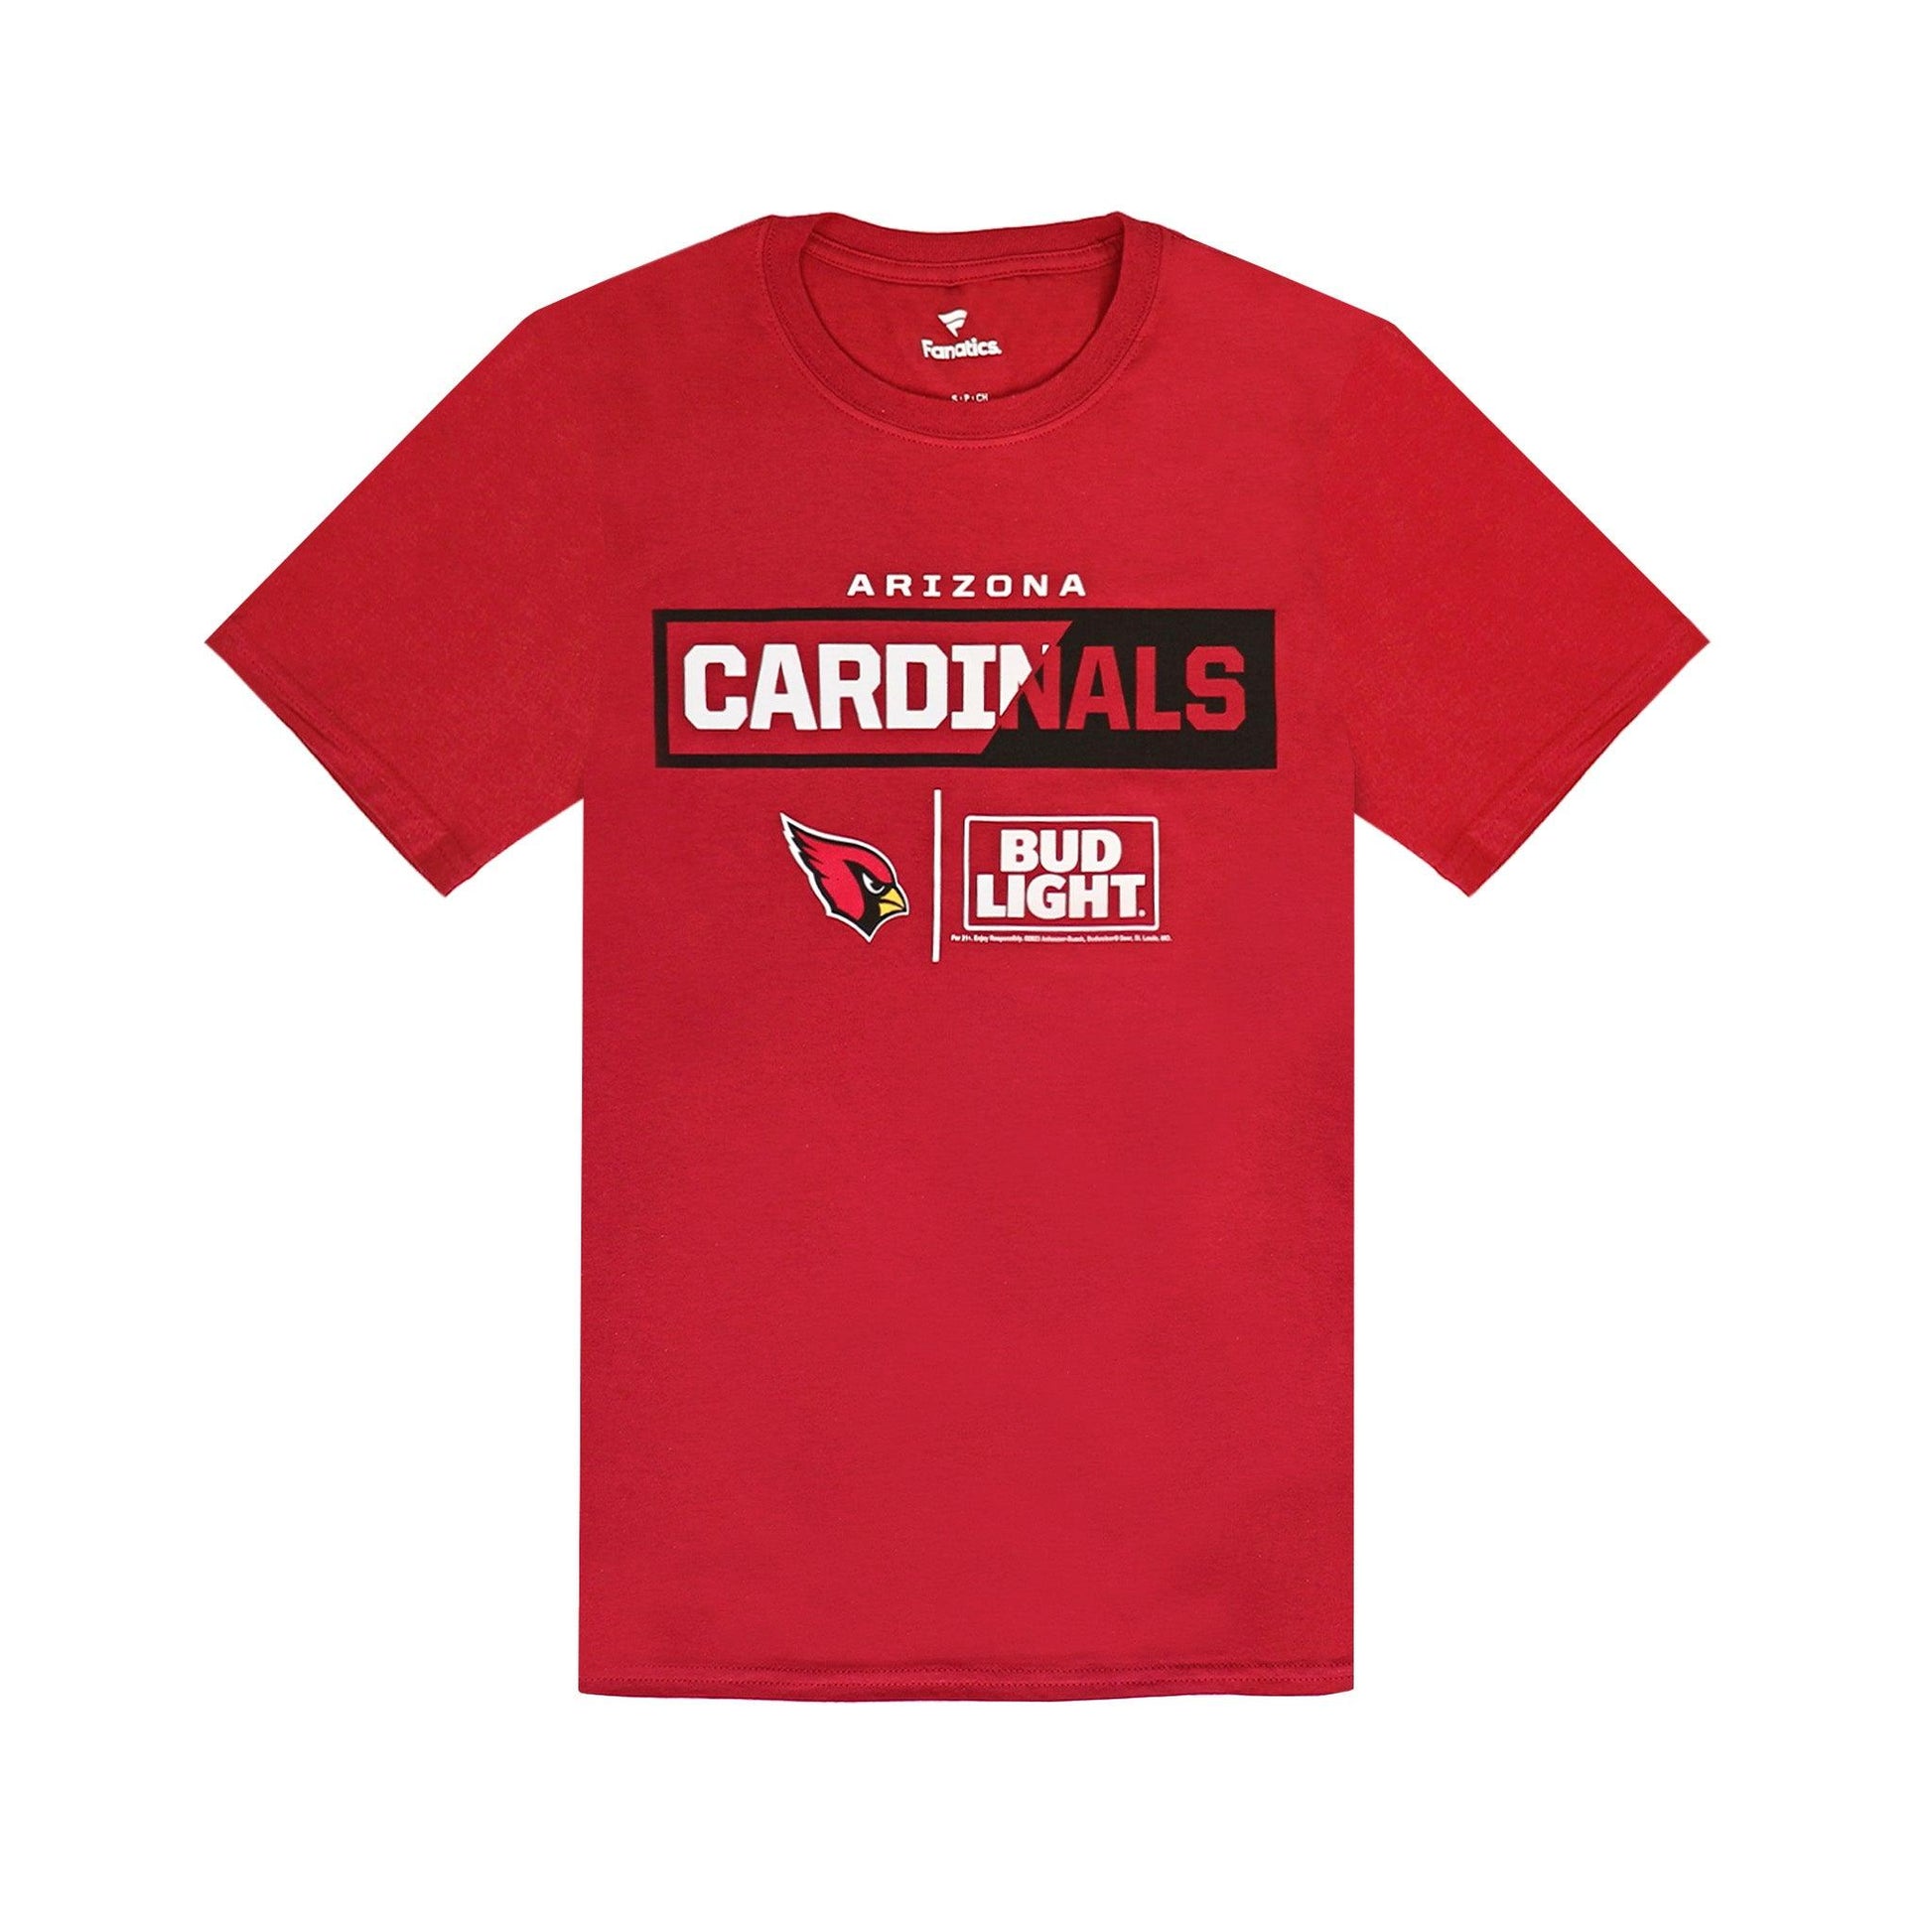 cardinals and bud light shirt front